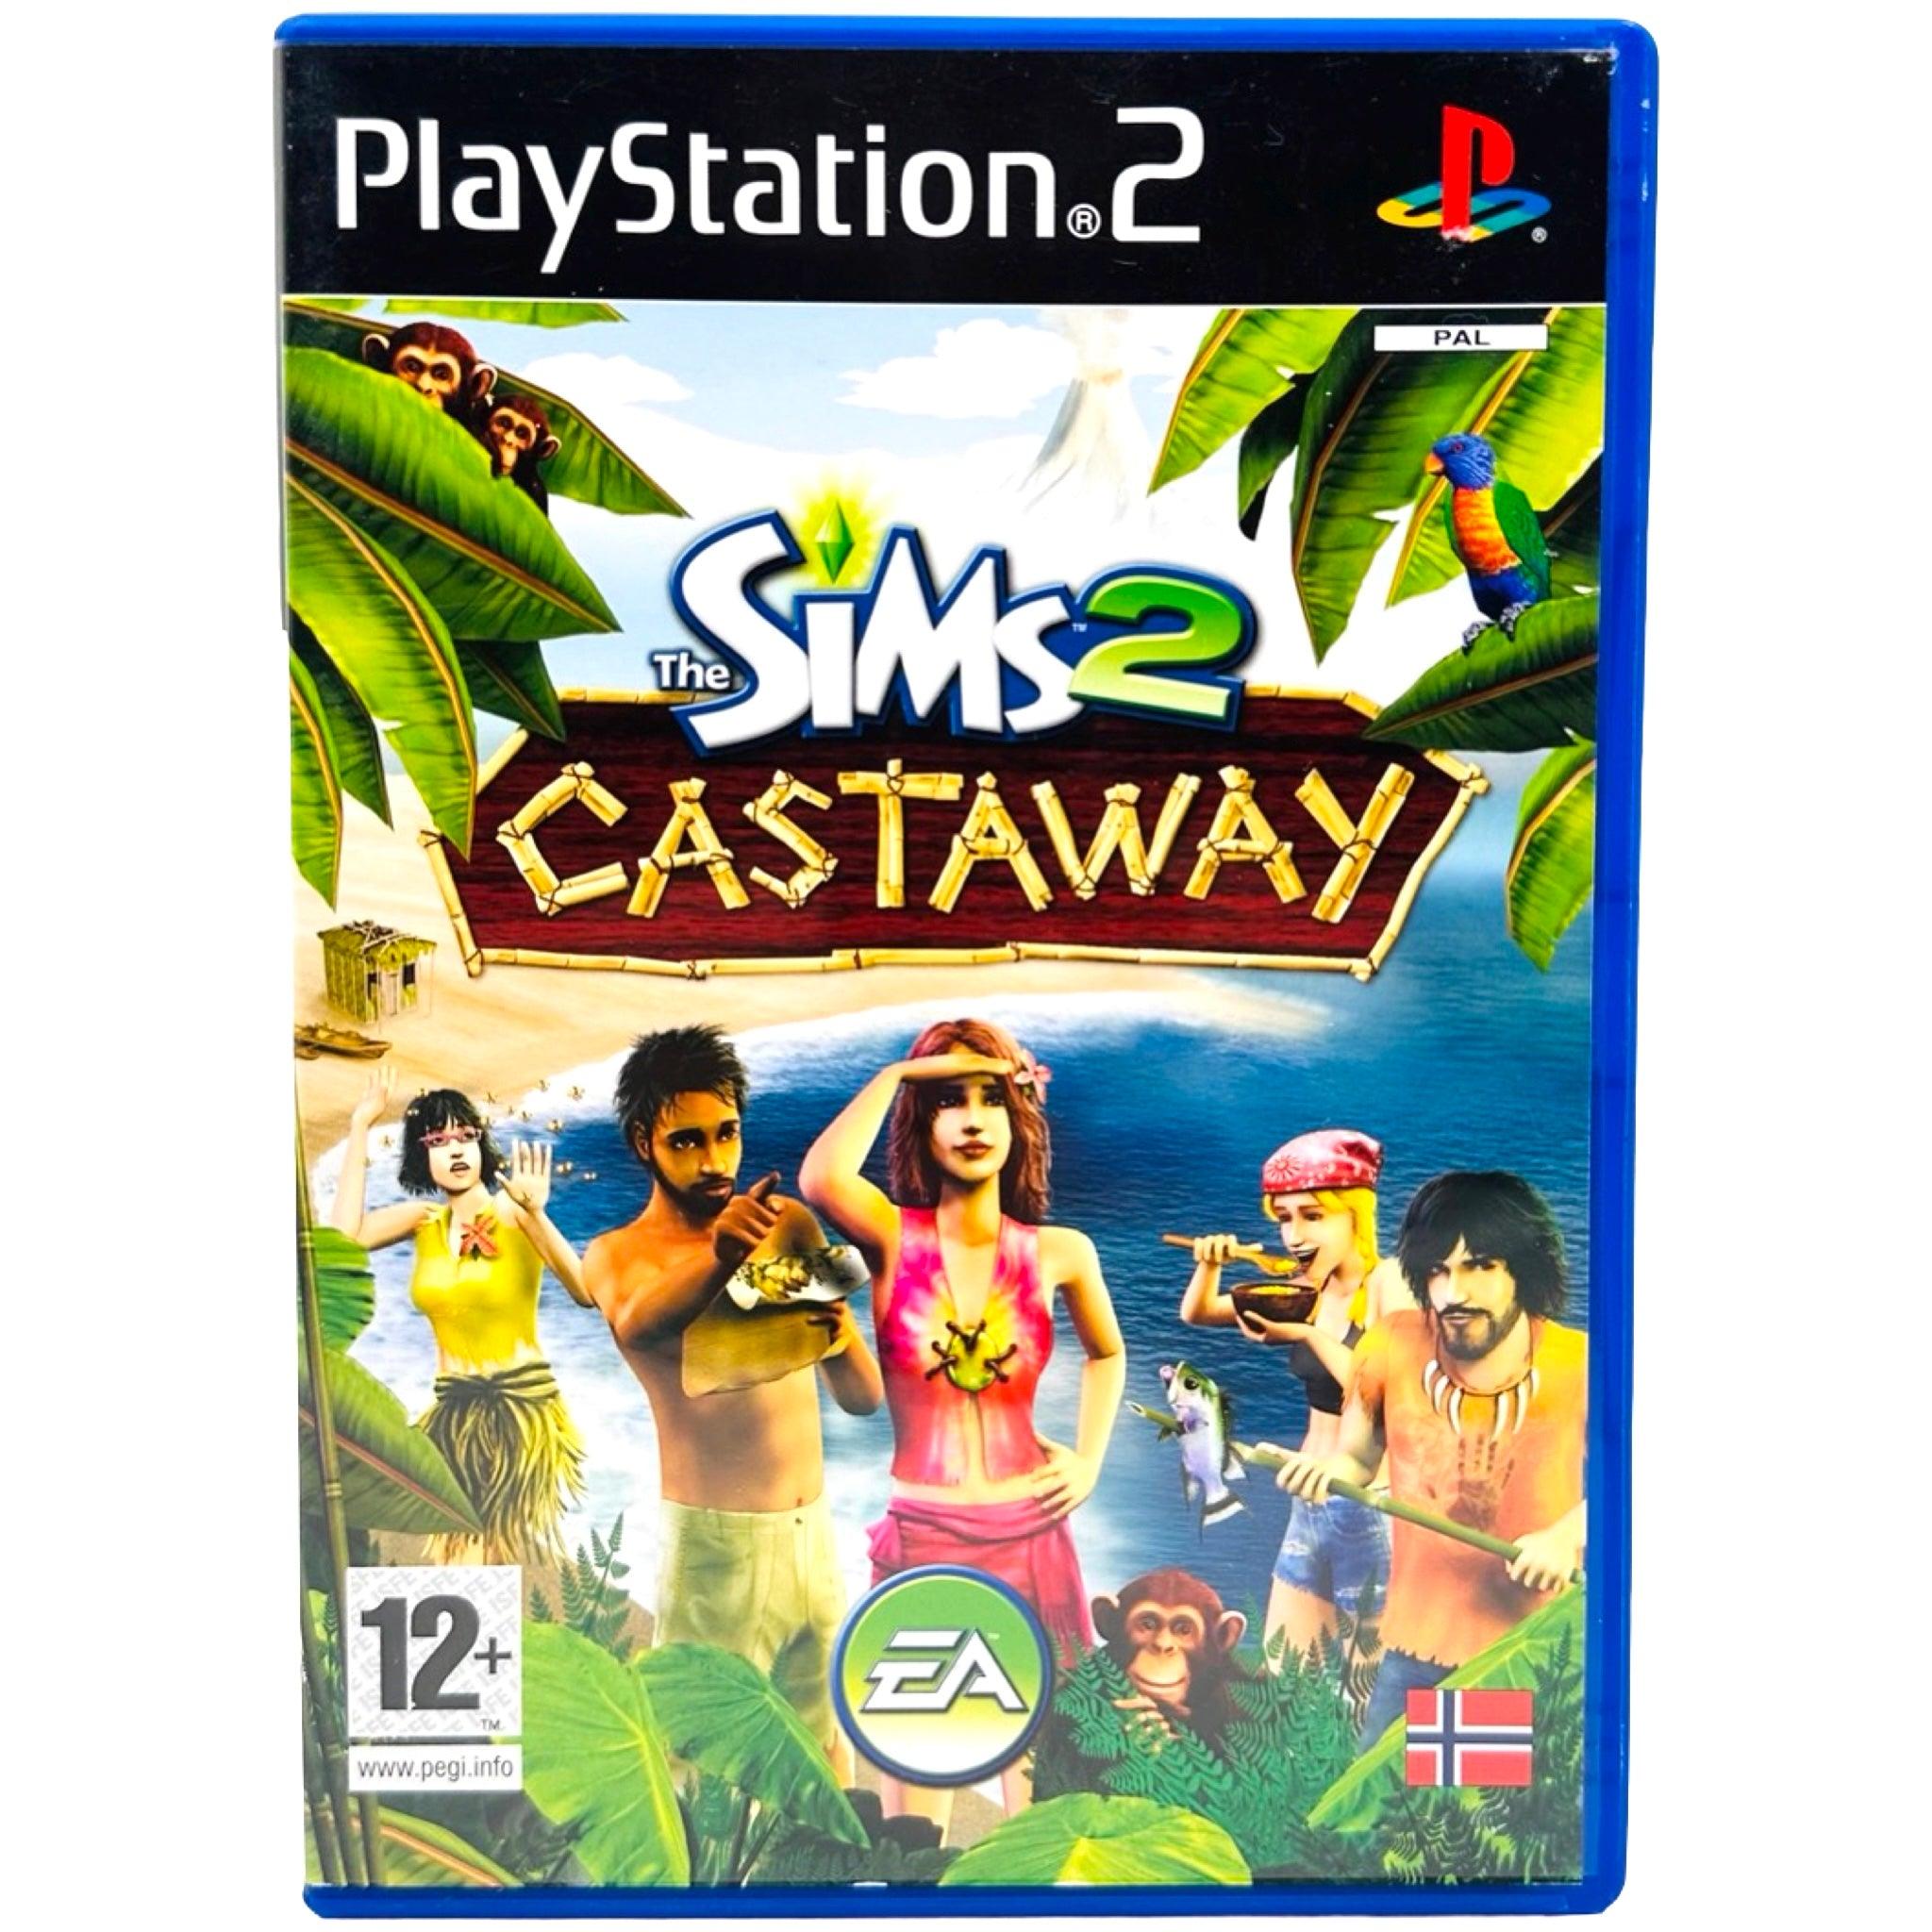 PS2: The Sims 2: Castaway - RetroGaming.no